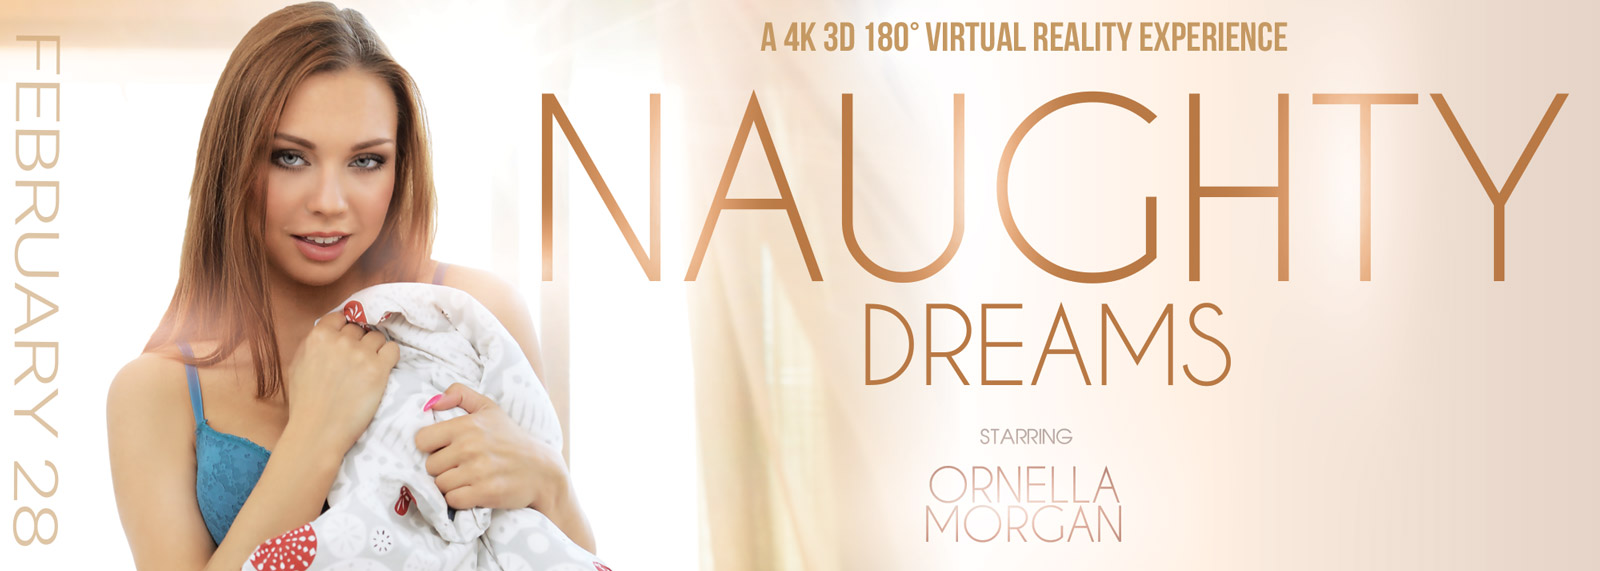 Naughty Dreams - VR Porn Video, Starring: Ornella Morgan